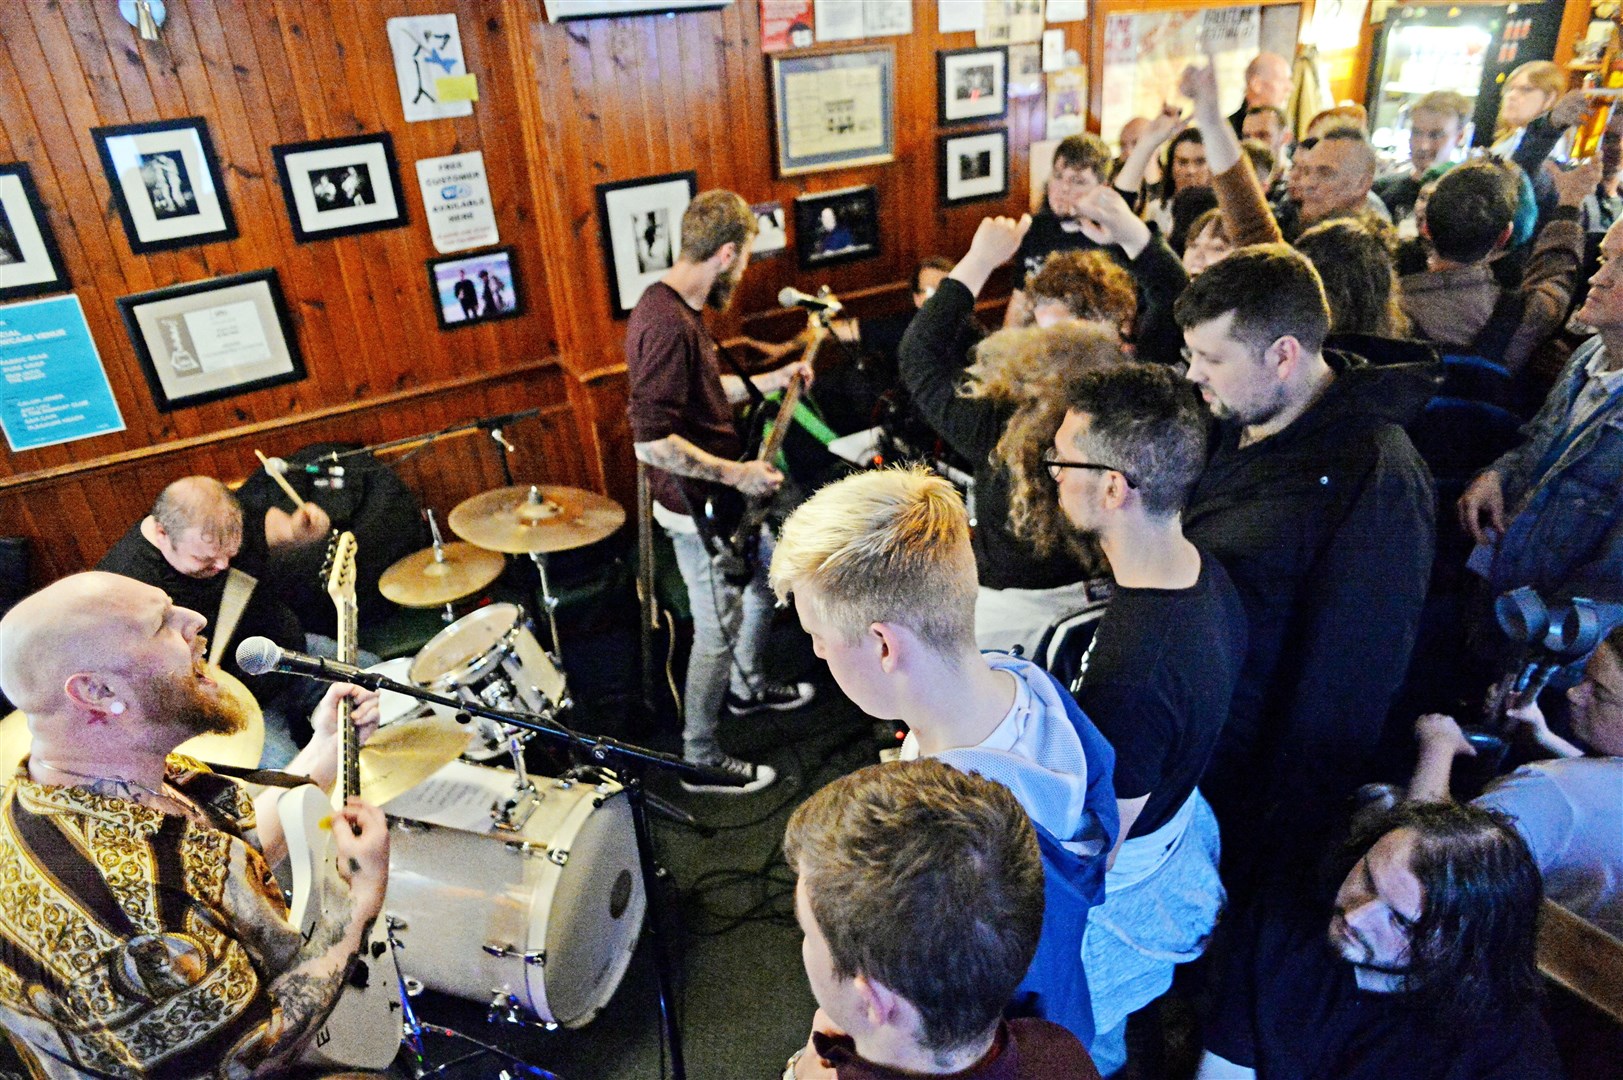 The pub has established itself as a popular music venue.